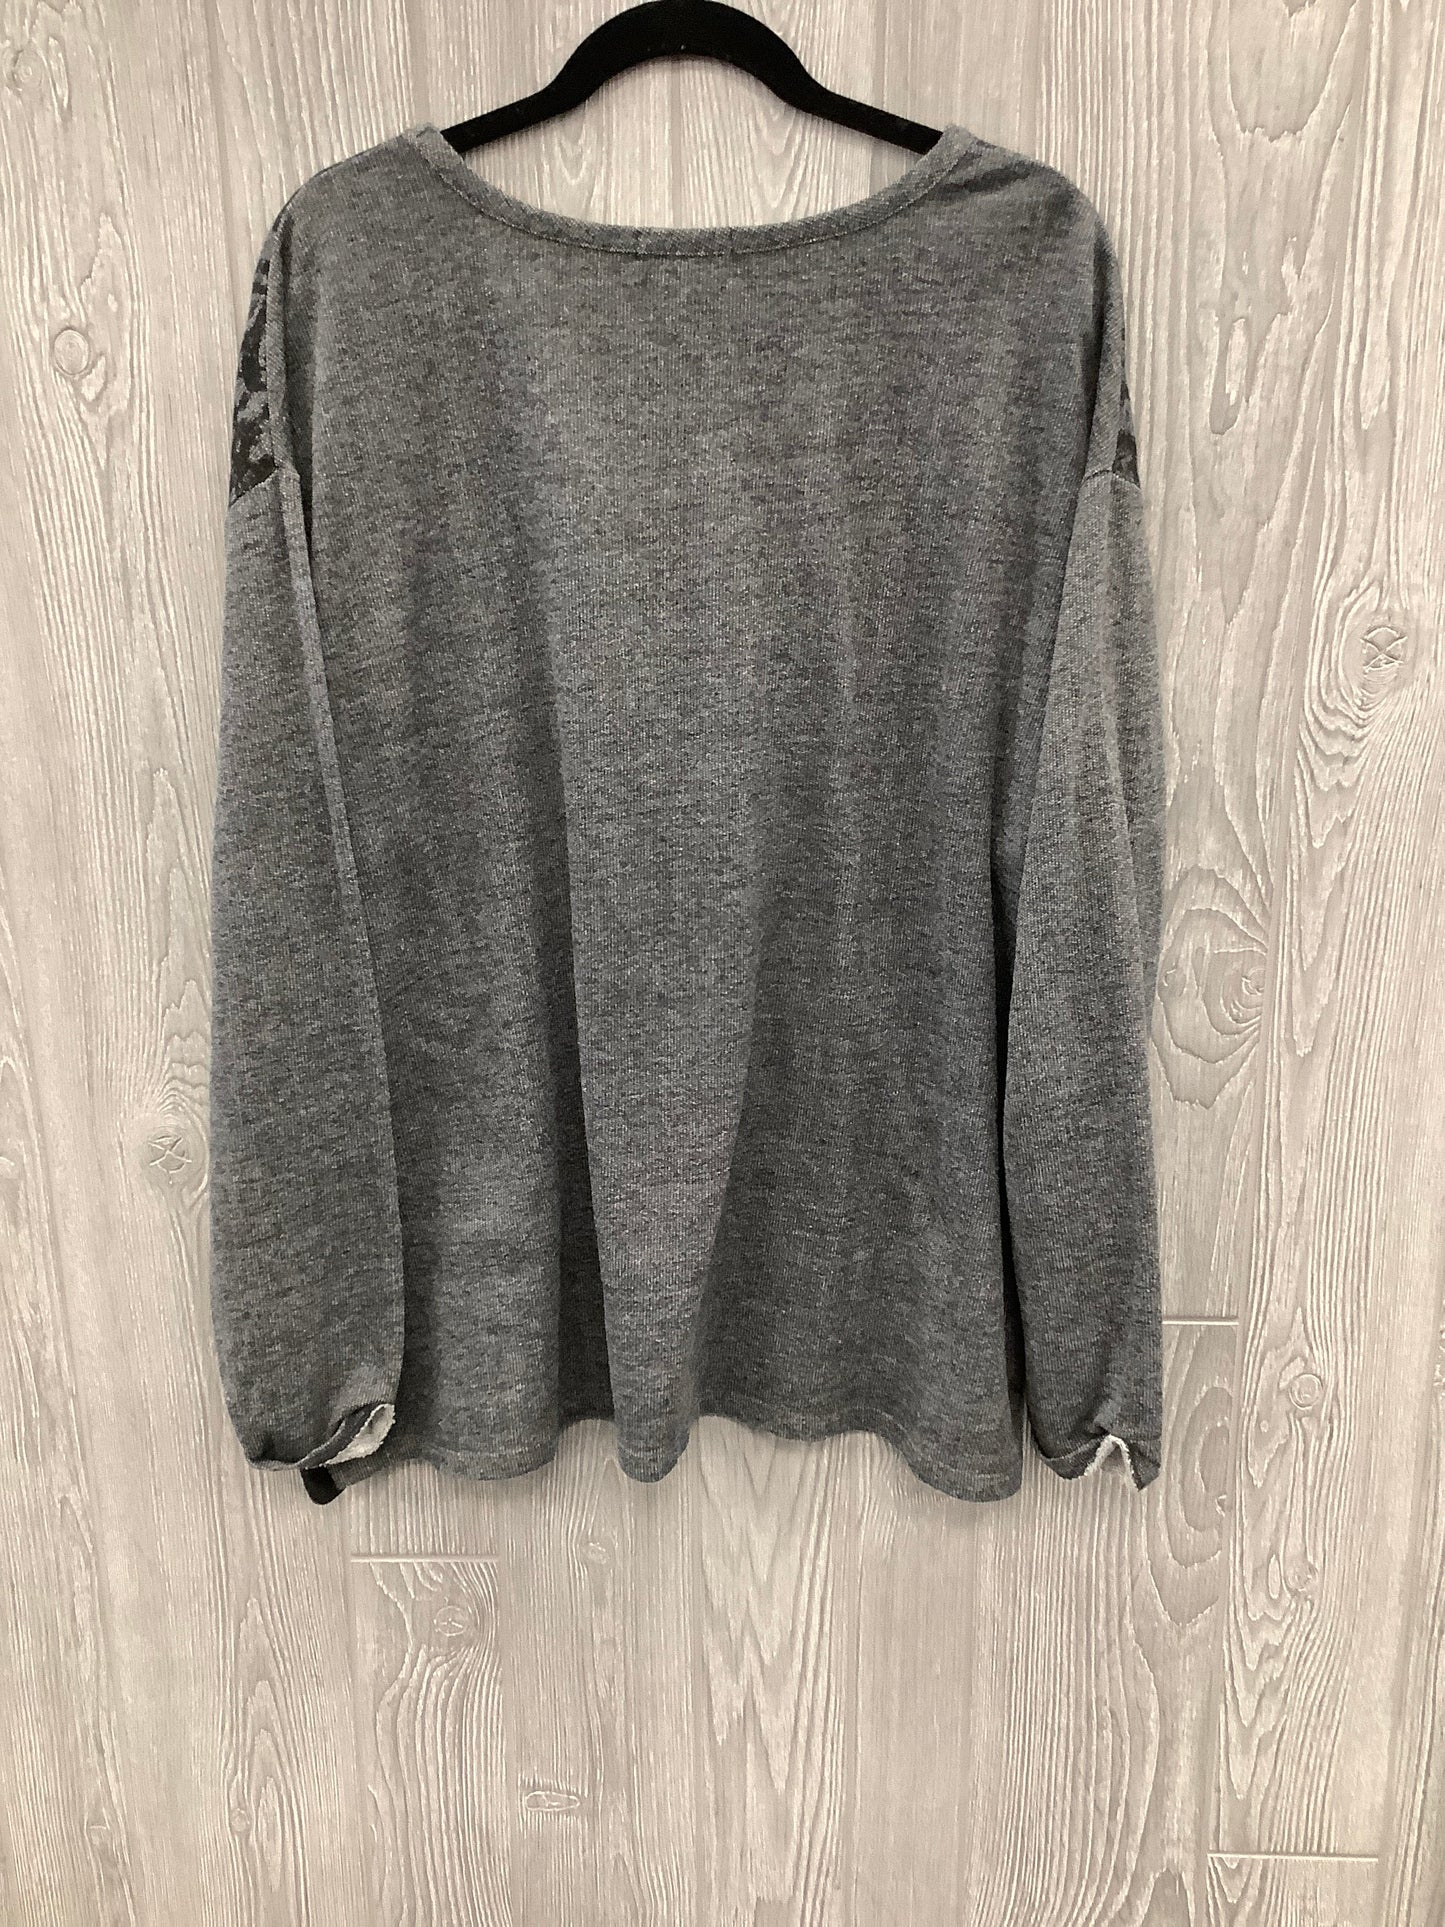 Sweatshirt By Lane Bryant  Size: 3x